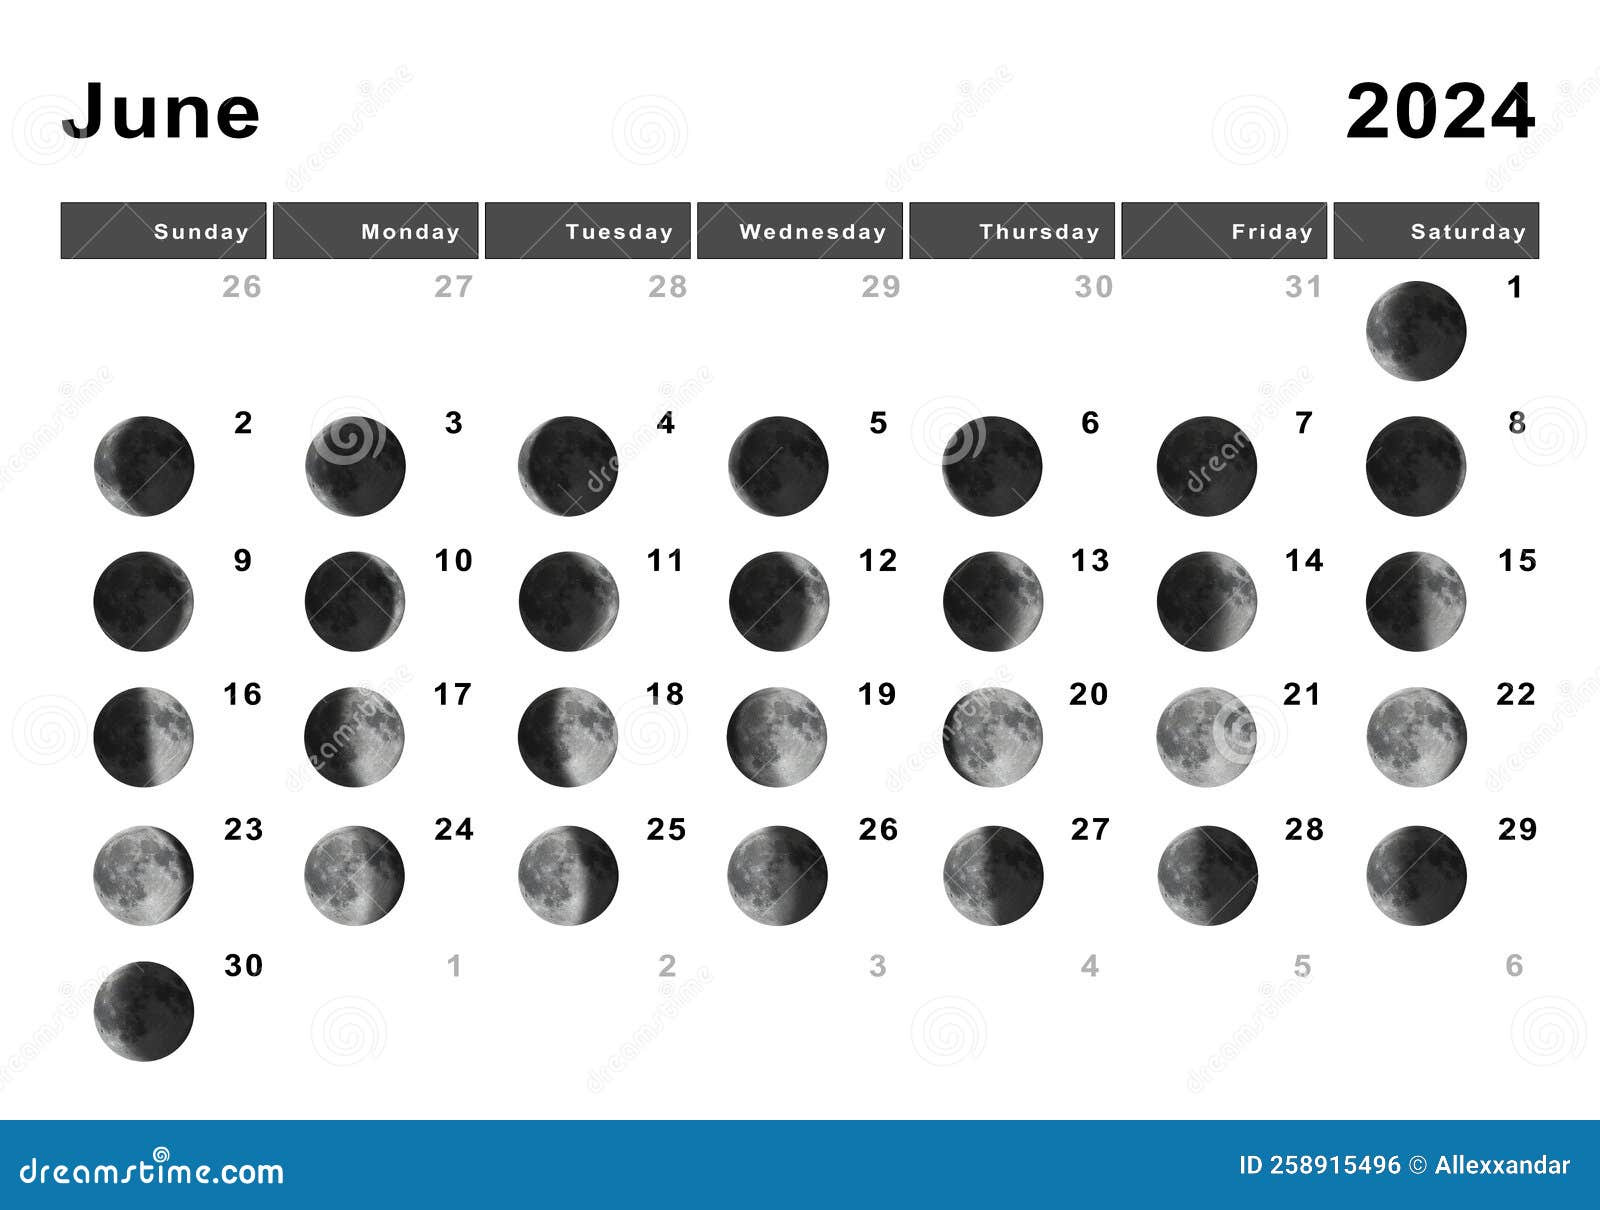 June 2024 Lunar Calendar, Moon Cycles Stock Illustration with regard to Moon Calendar June 2024